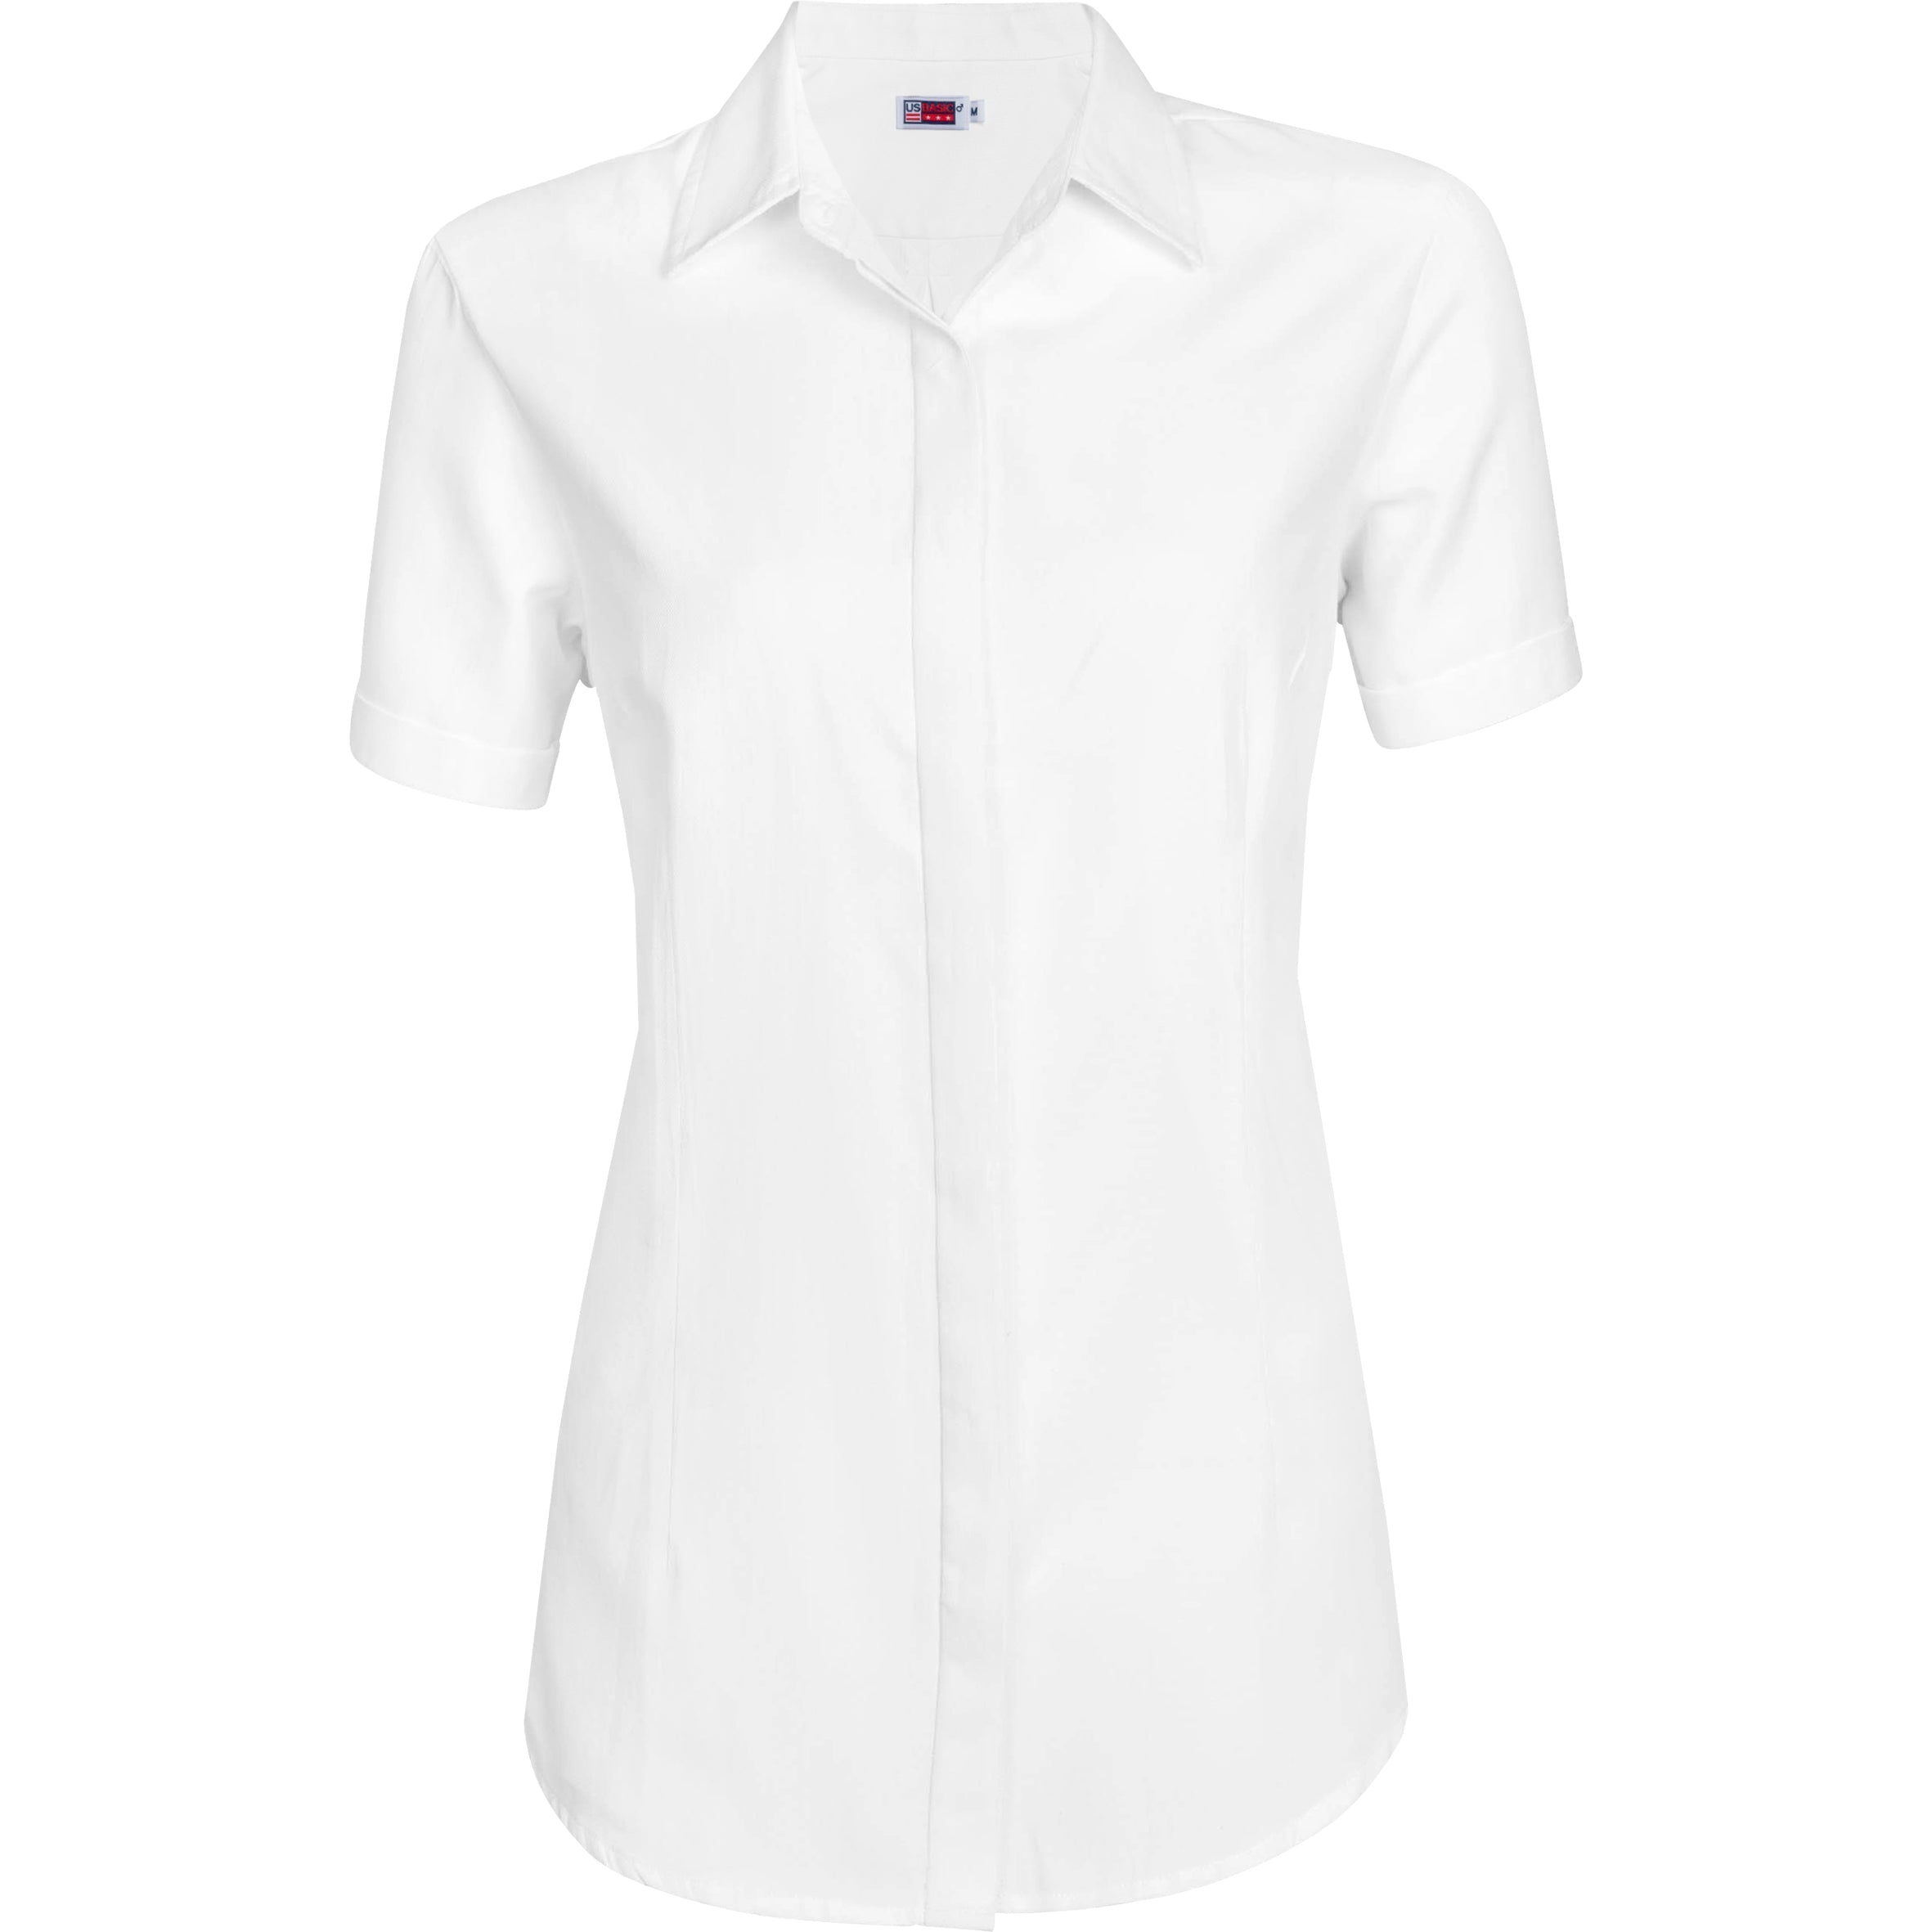 Ladies Short Sleeve Wallstreet Shirt - Blue Only-L-White-W